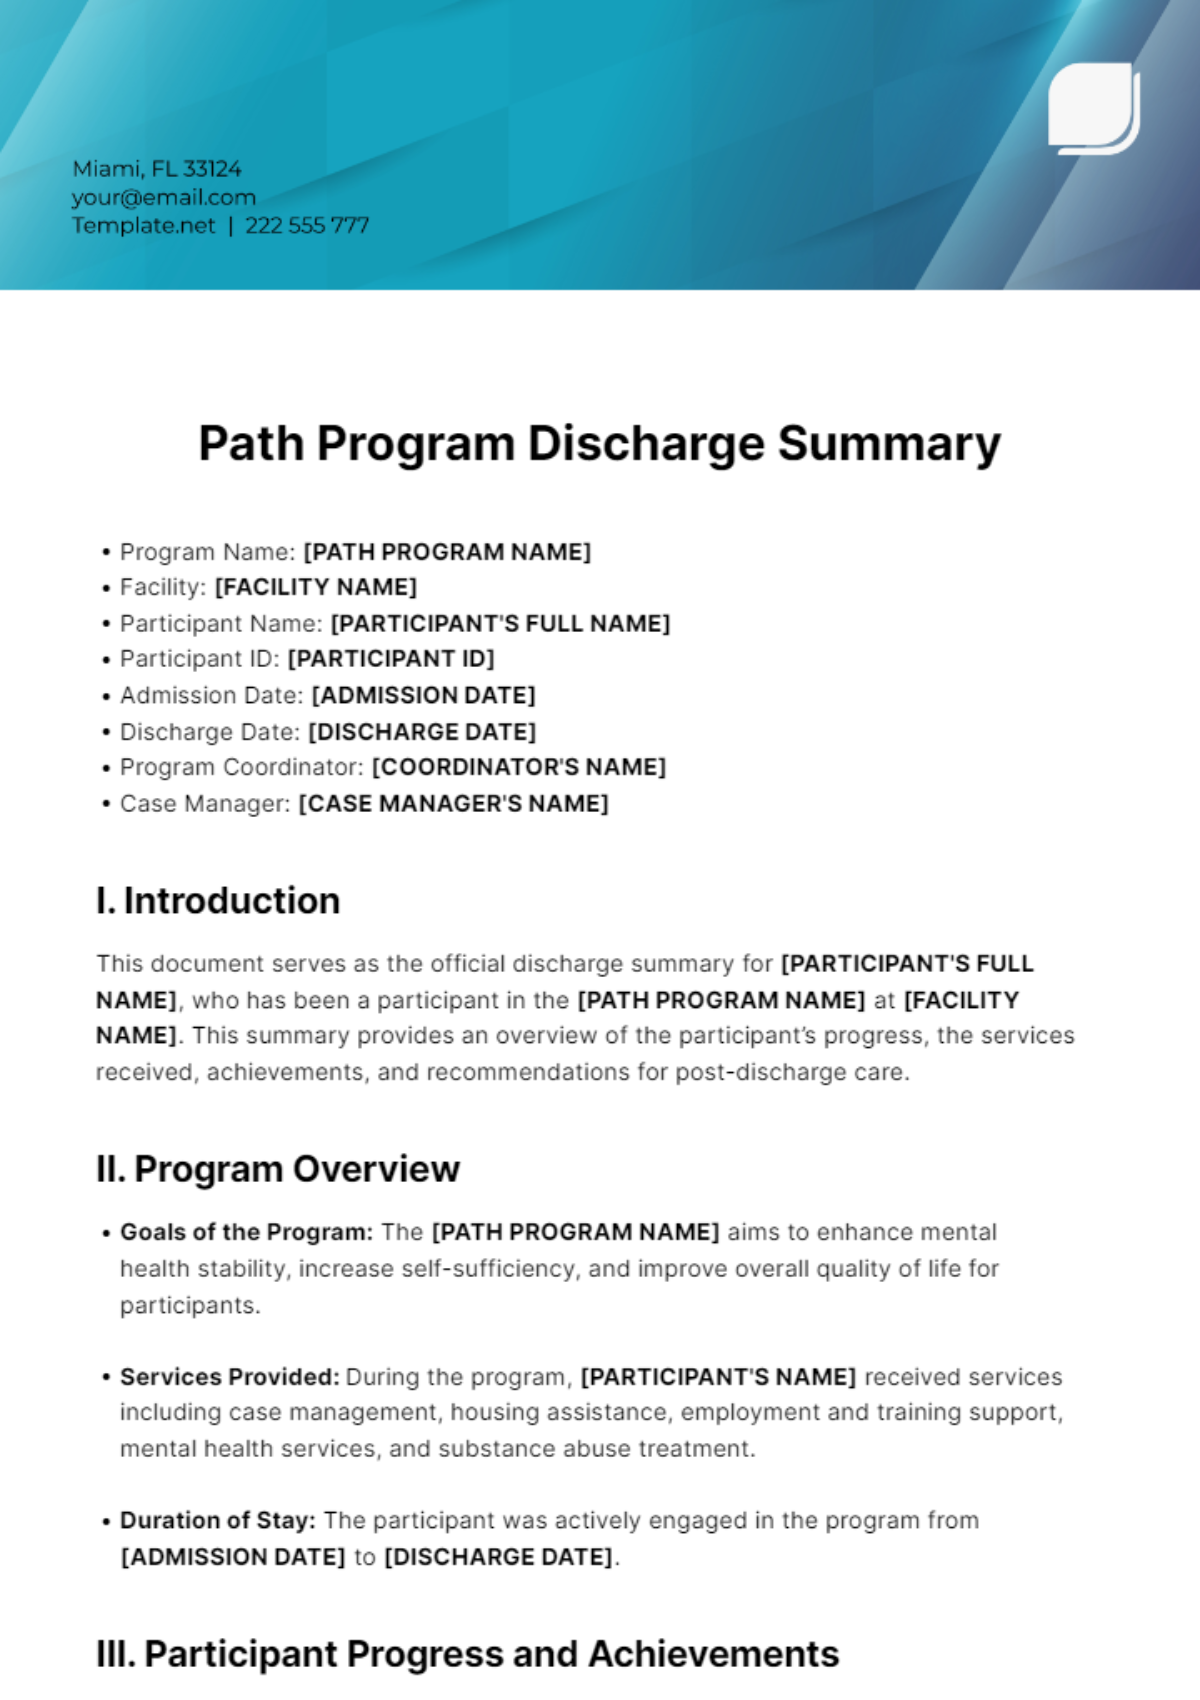 Path Program Discharge Summary Template